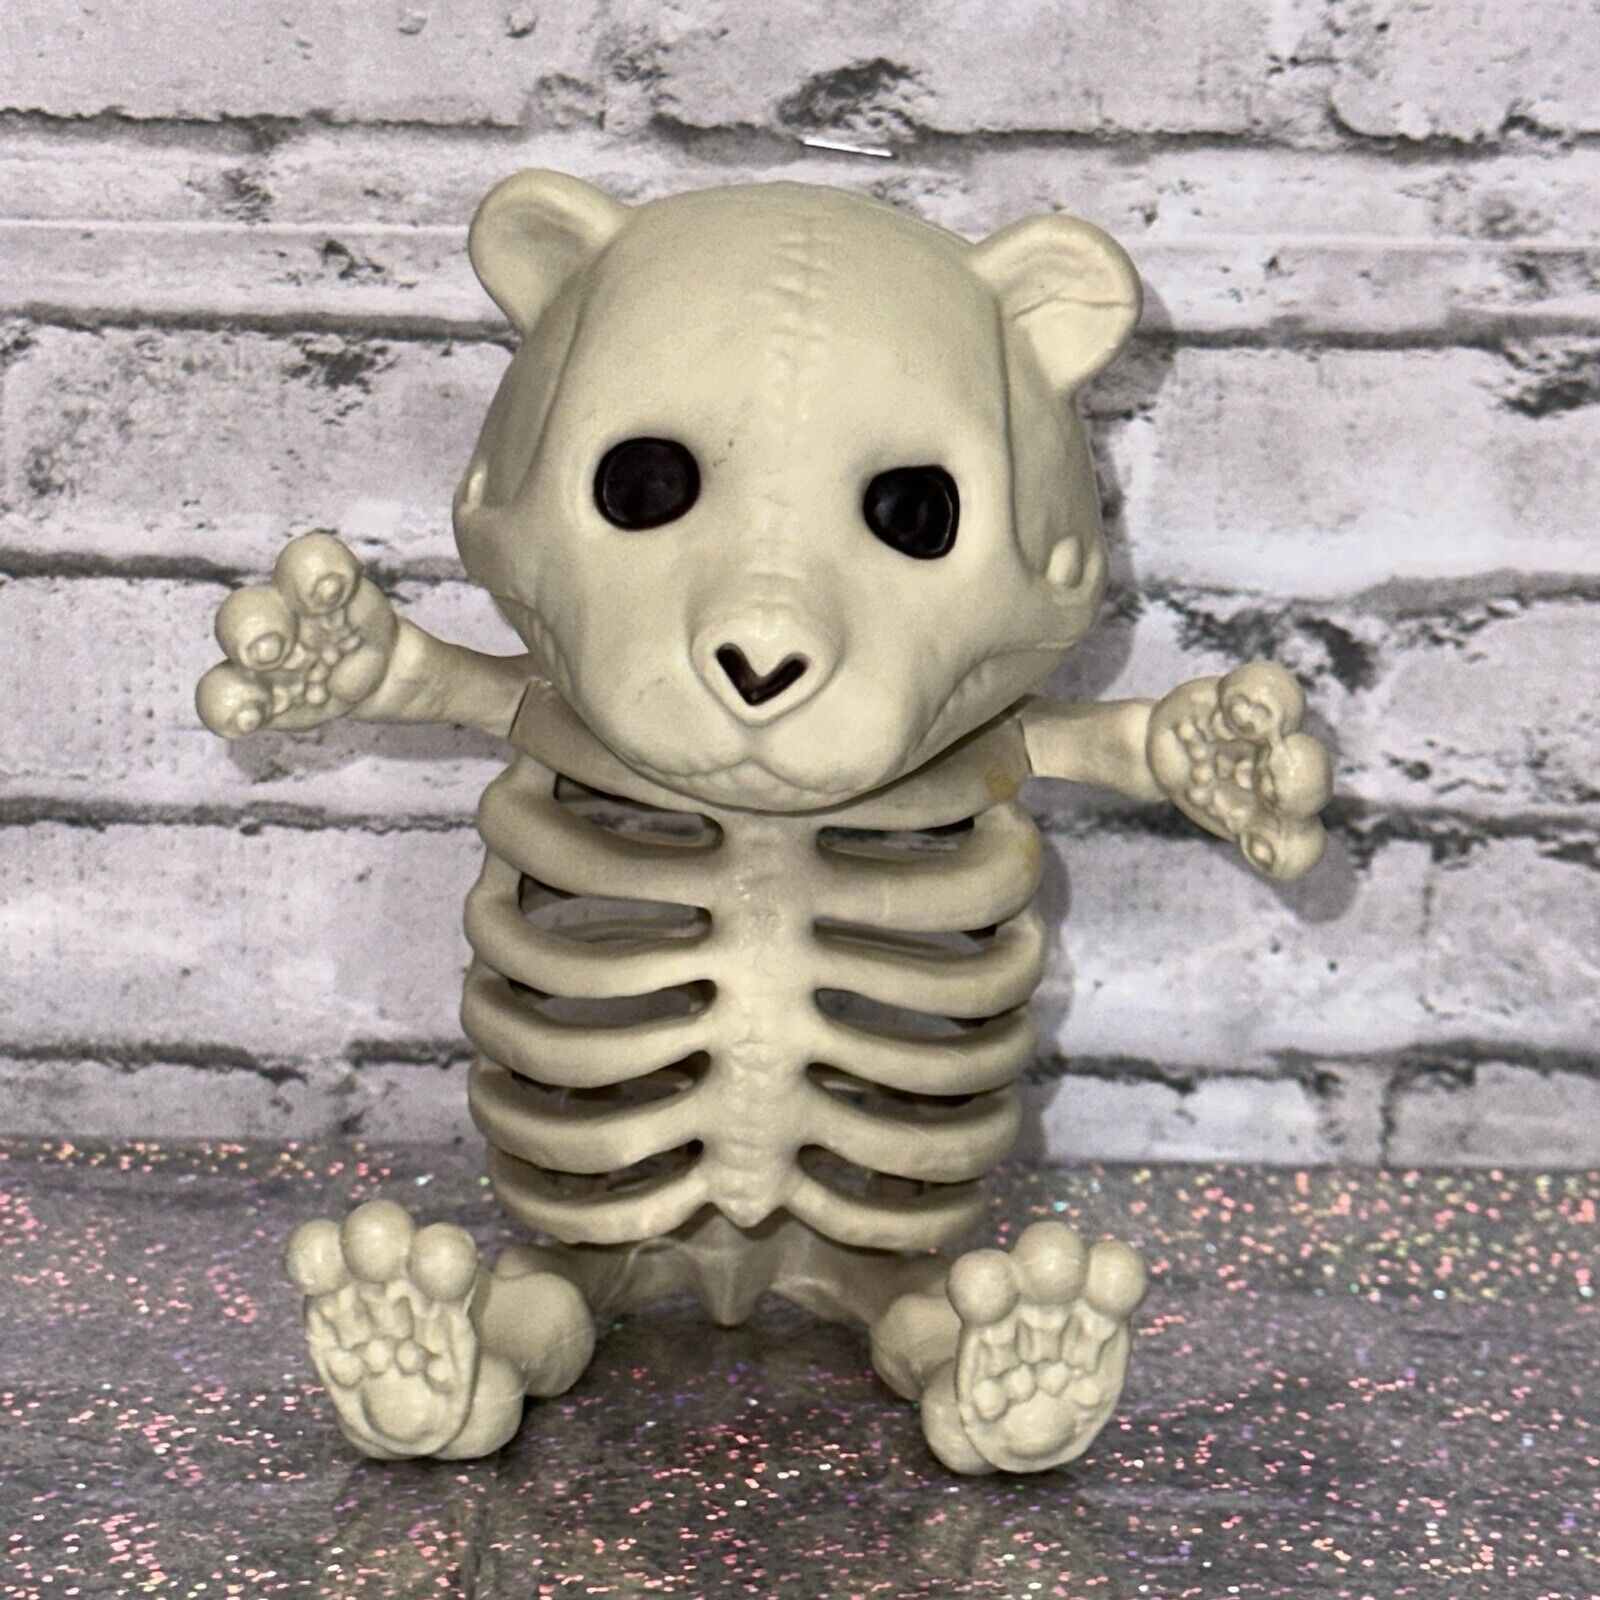 Crazy Bonez Teddy Bonez Skeleton Figurine 5 Inch Figure Halloween Decor